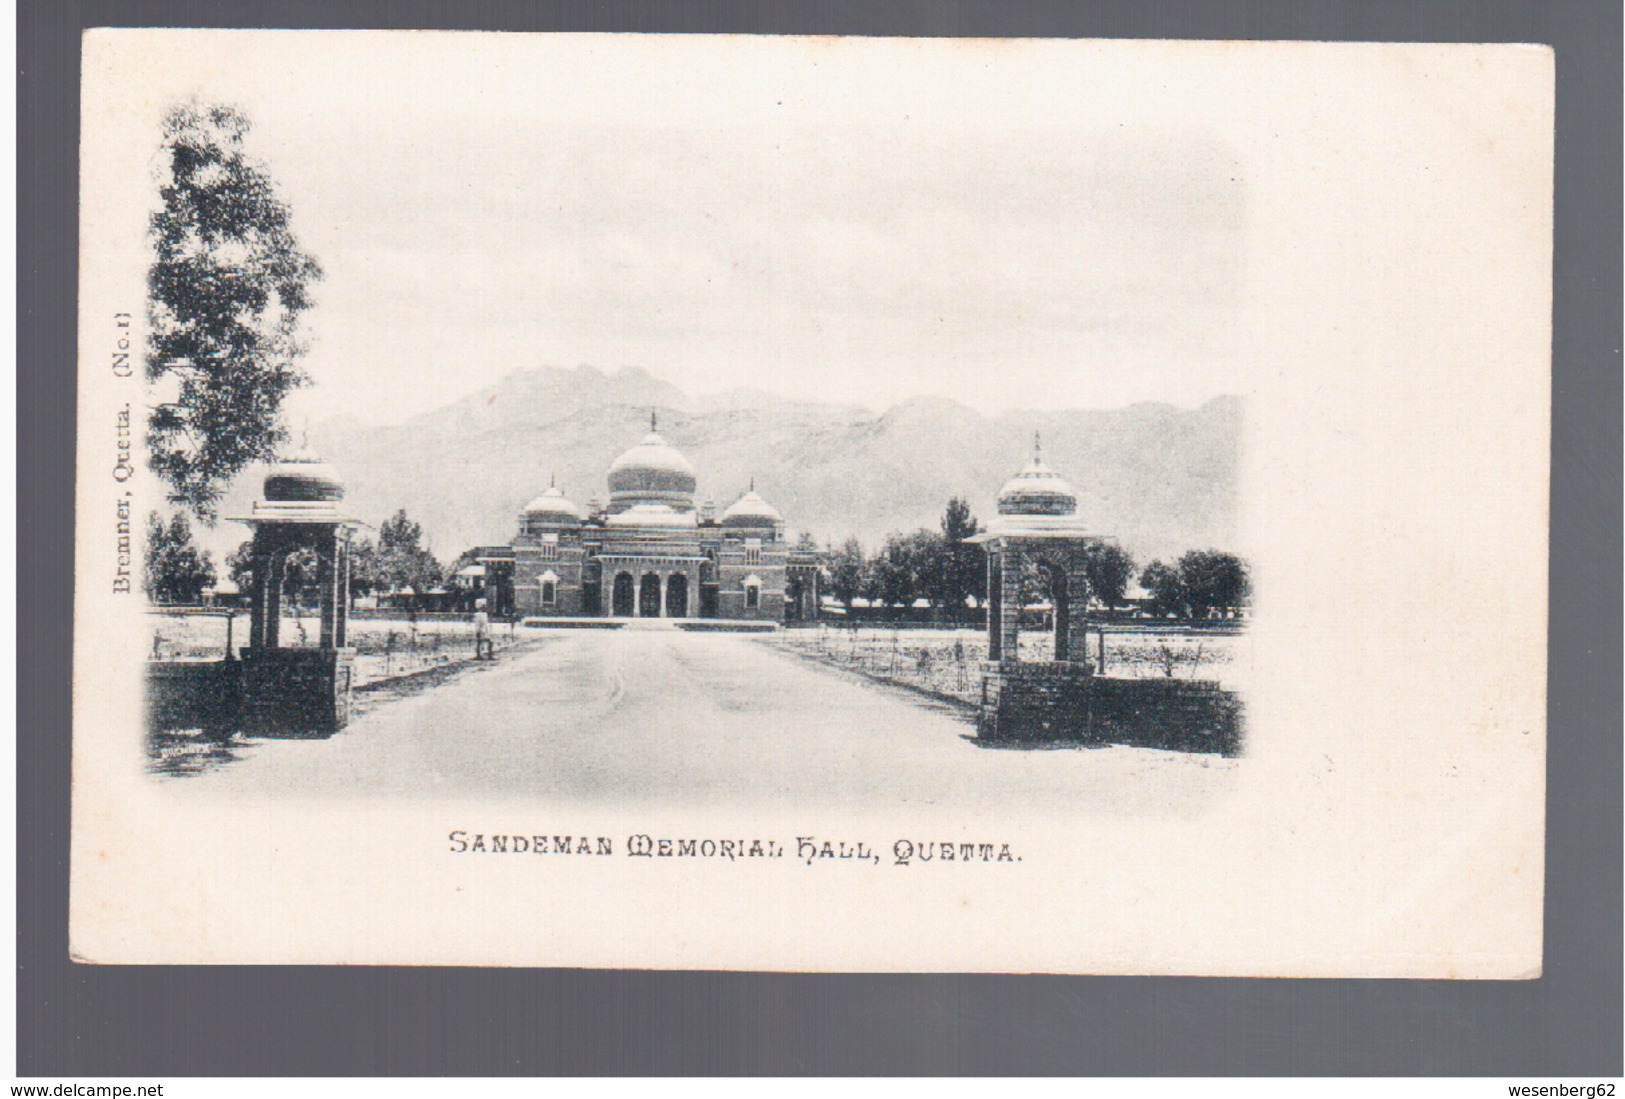 PAKISTAN Quetta, Sandemann Memorial Hall Ca 1905 OLD POSTCARD - Pakistan